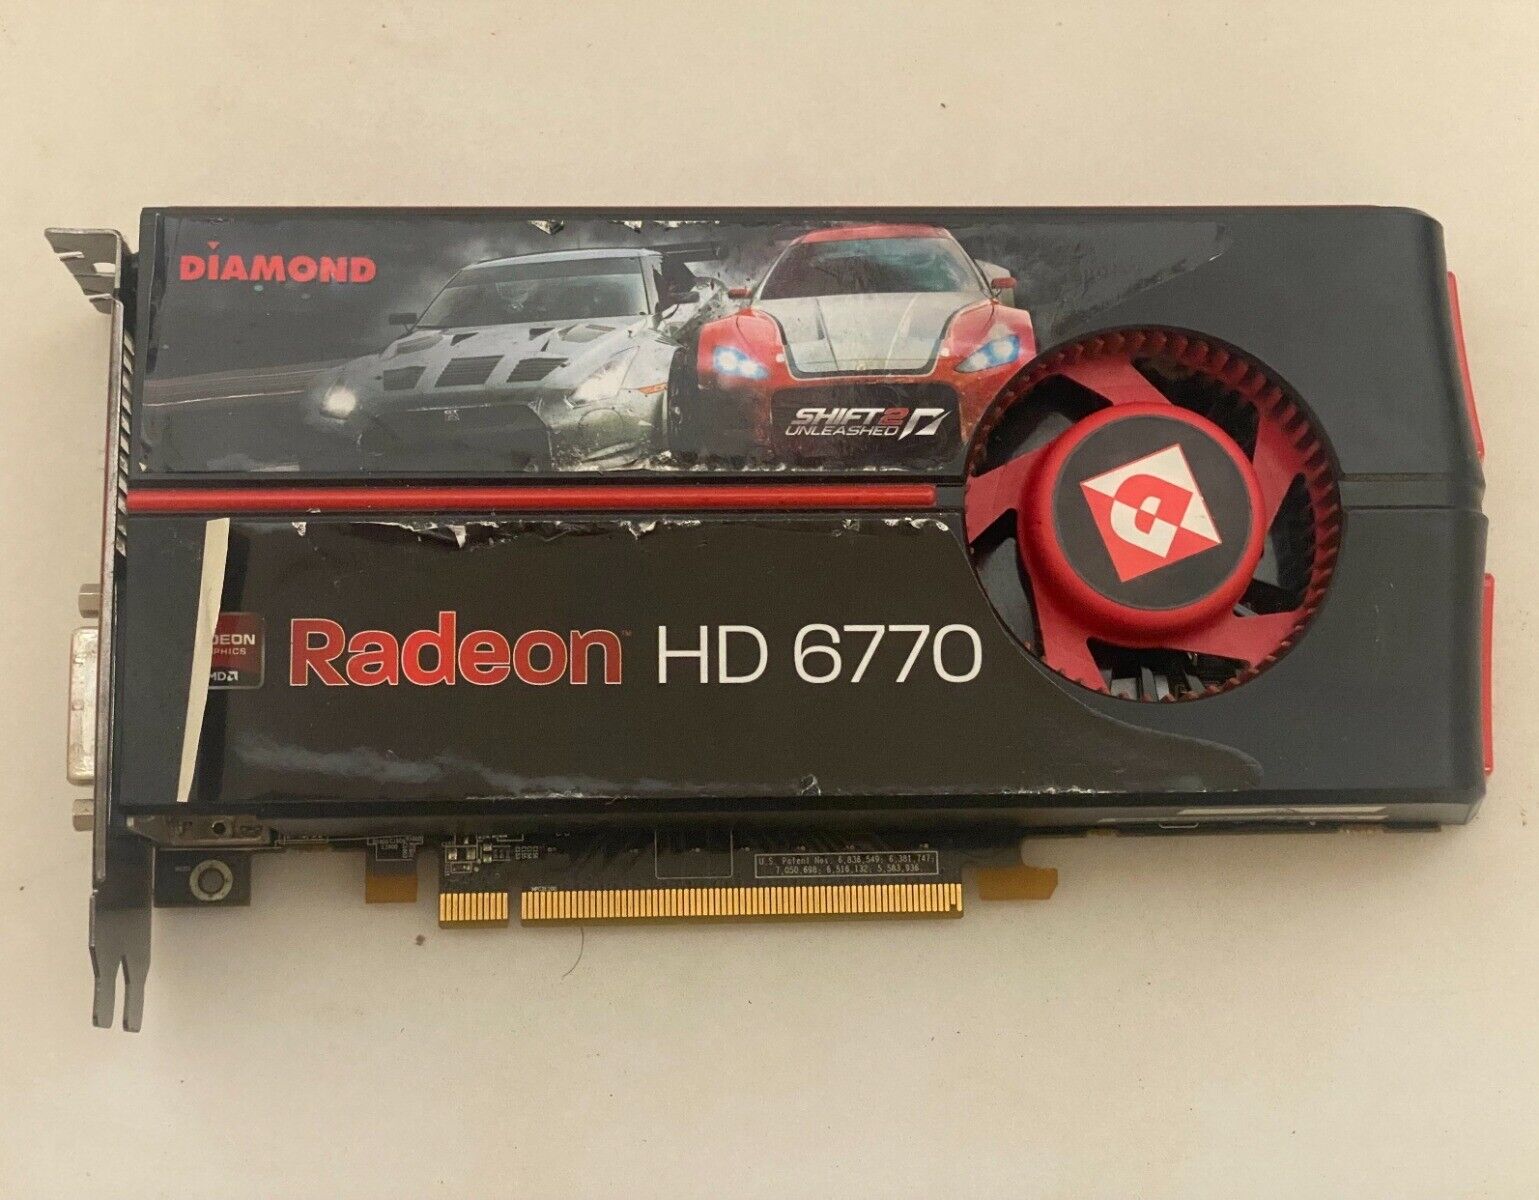 AMD Diamond Radeon HD 6770 1G GDDR5 7120284000G Video Card ATI-102-C01002(B)